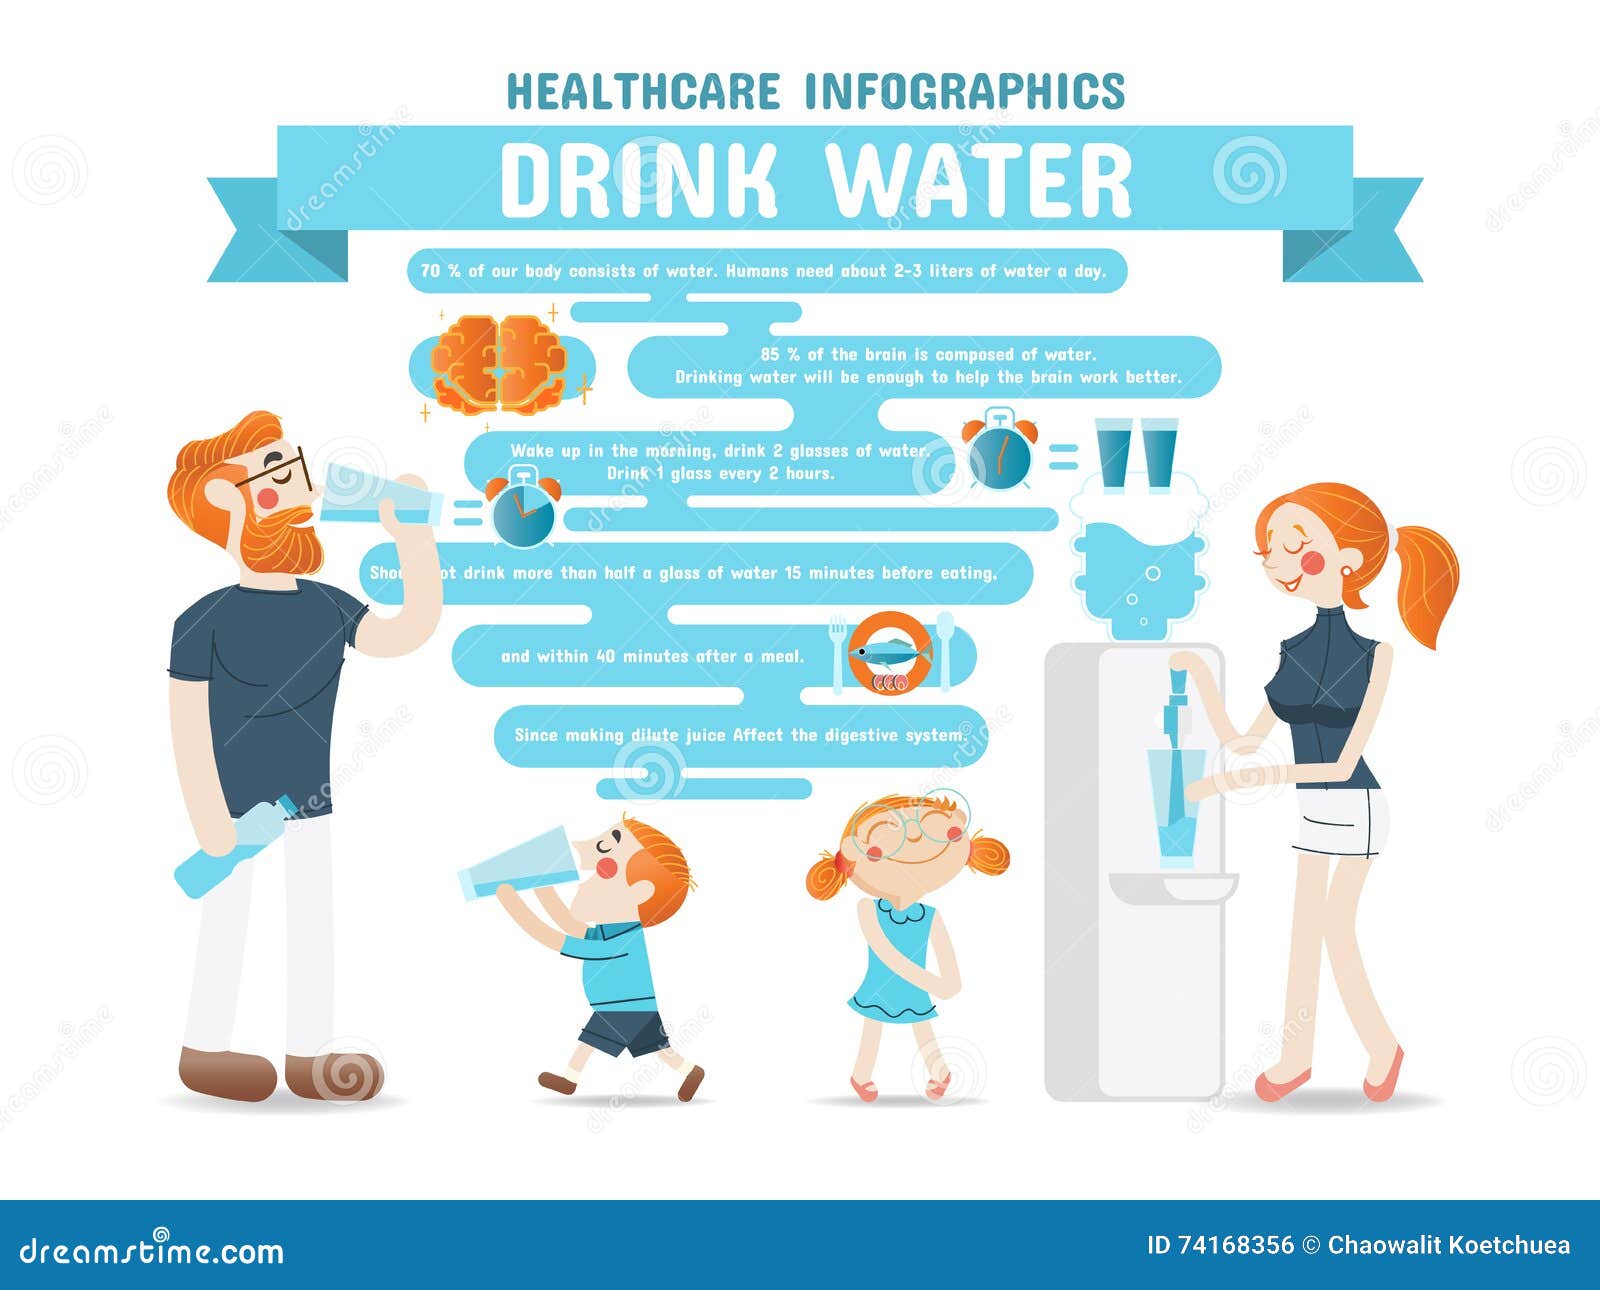 drink water healthcare infographics